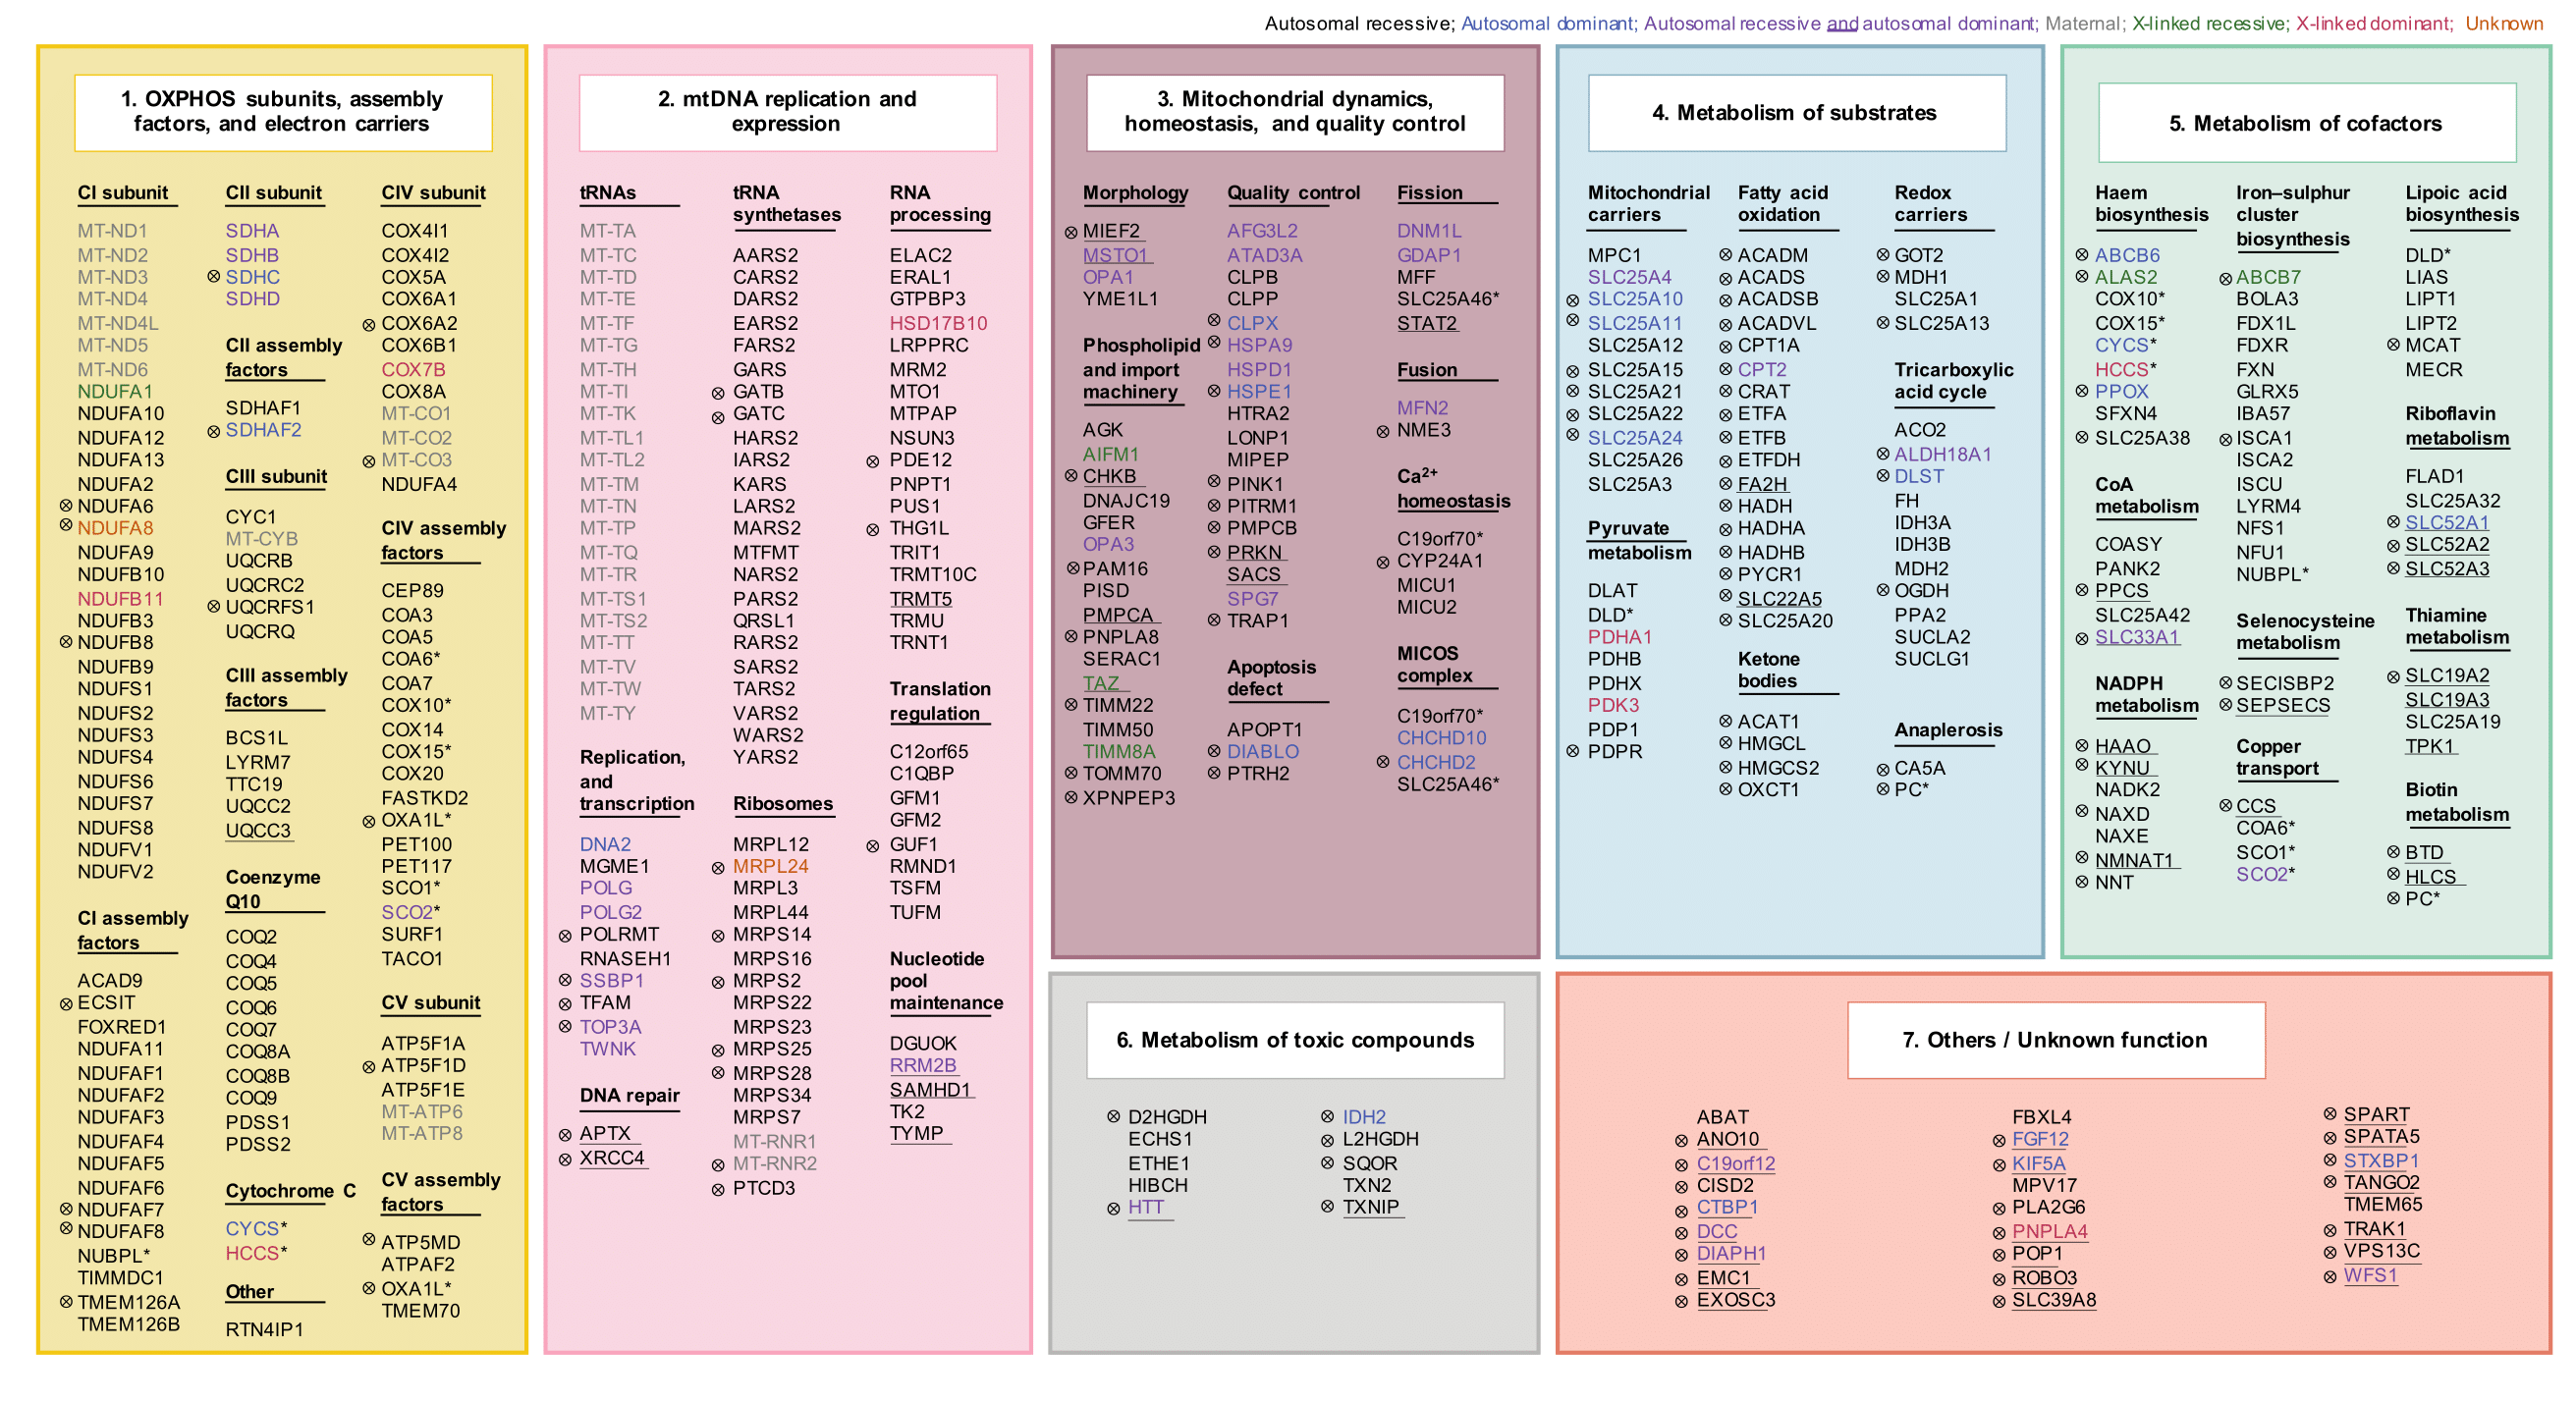 Disease gene table